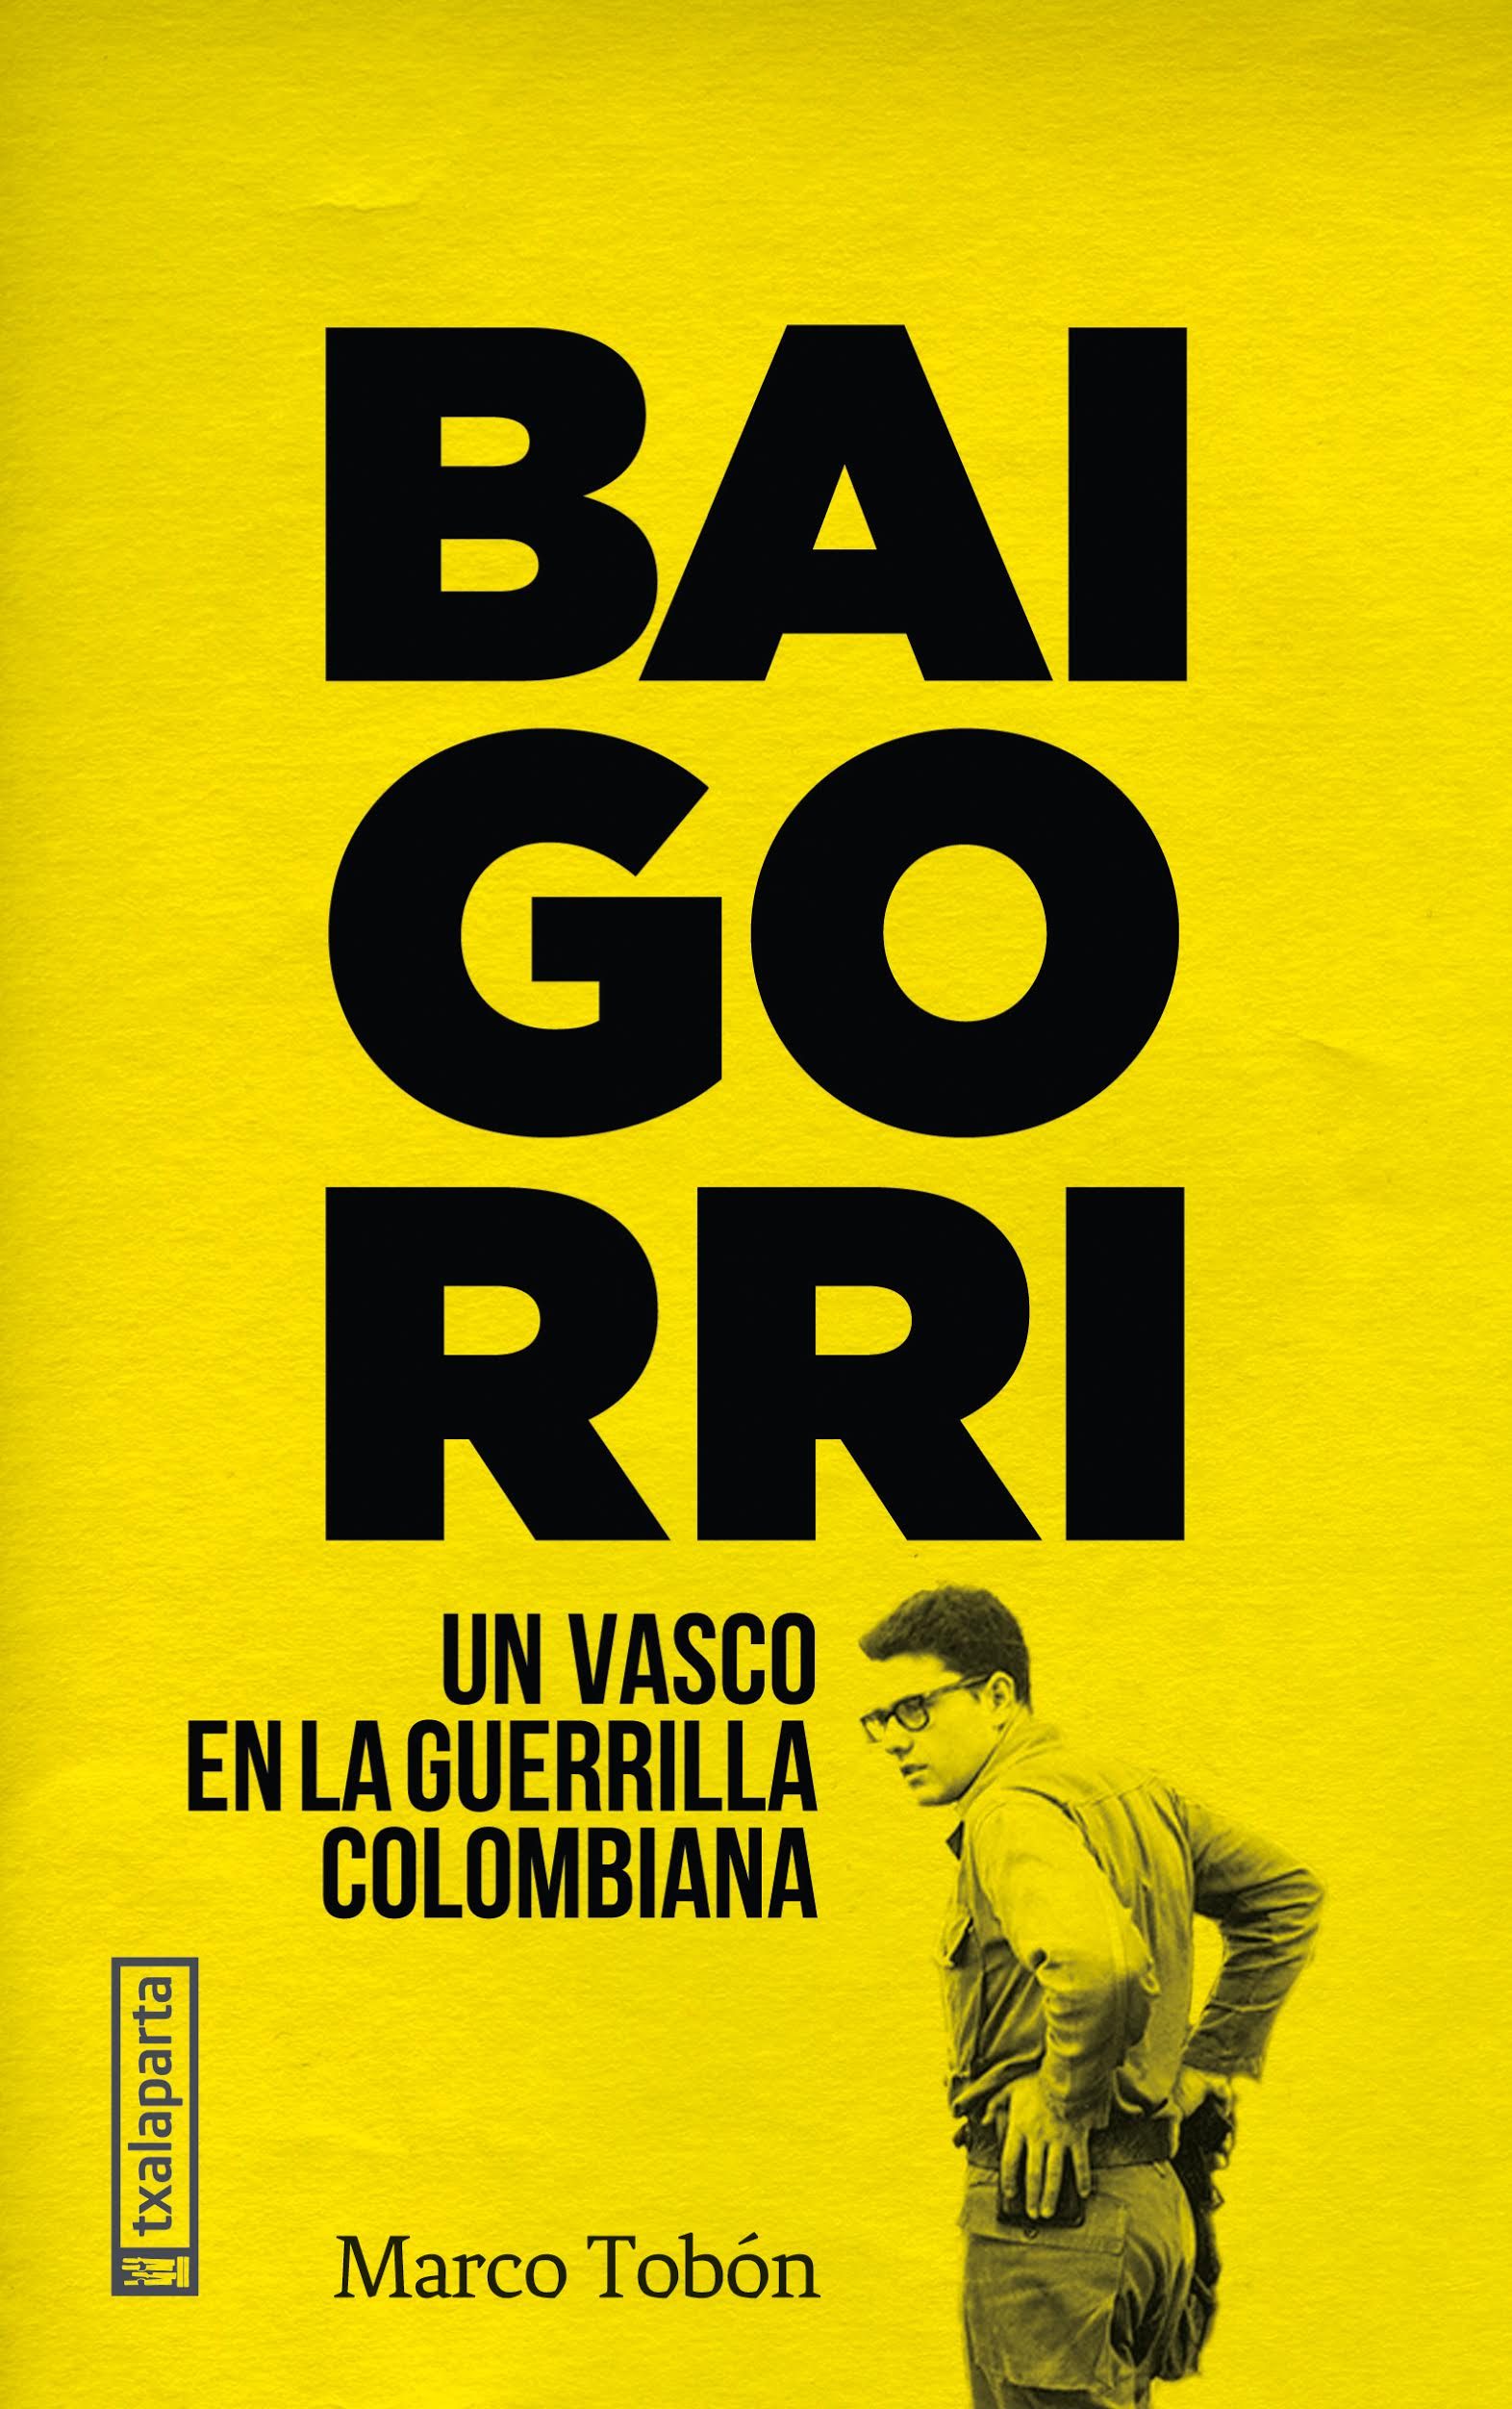 Marco Tobón, 'Baigorri. Un vasco en la guerrilla colombiana'. Ed. Txalparata, 284 p., 18 €.